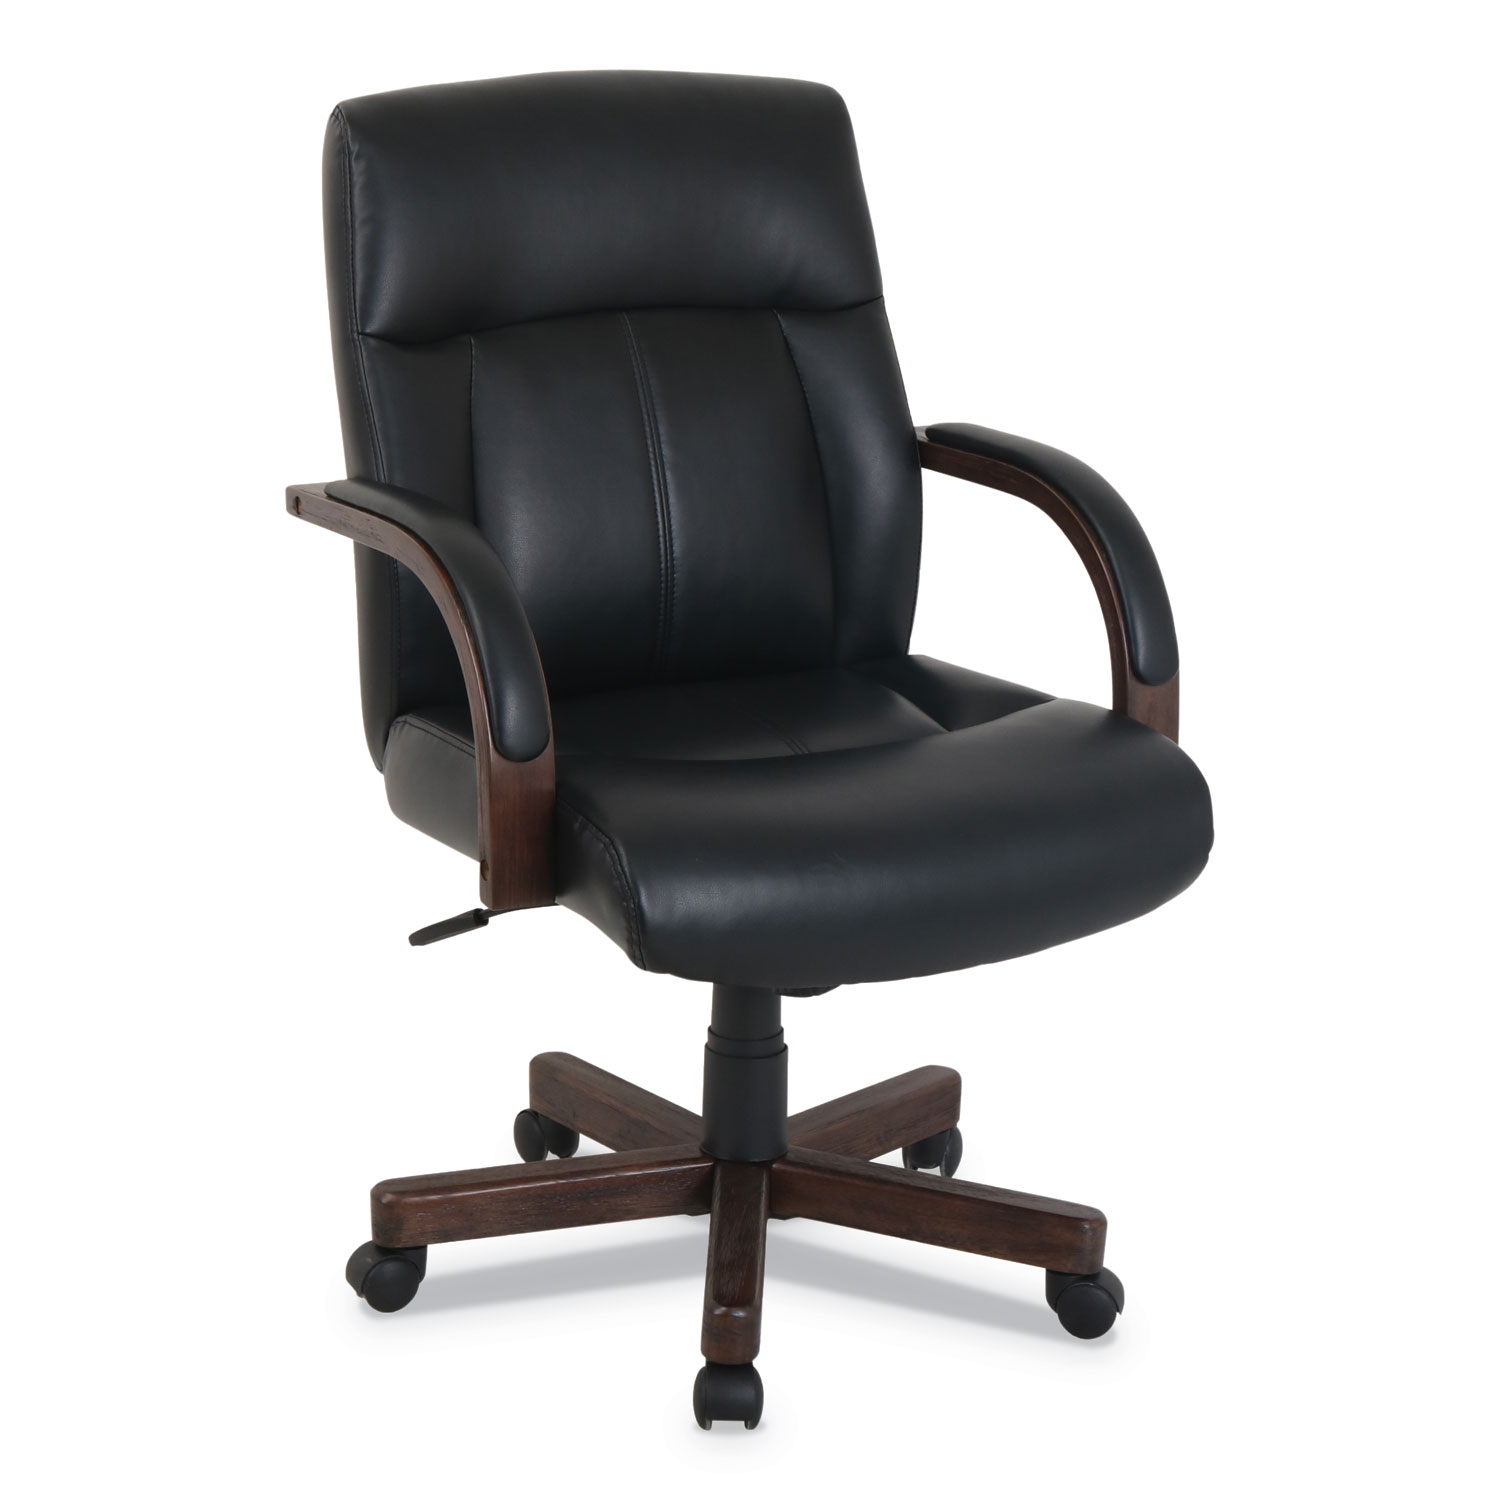  kathy ireland OFFICE by Alera KA641MB kathy ireland OFFICE by Alera Dorian Series Wood-Trim Leather Office Chair, Black Seat/Back, Mahogany Base (ALEKA641MB) 